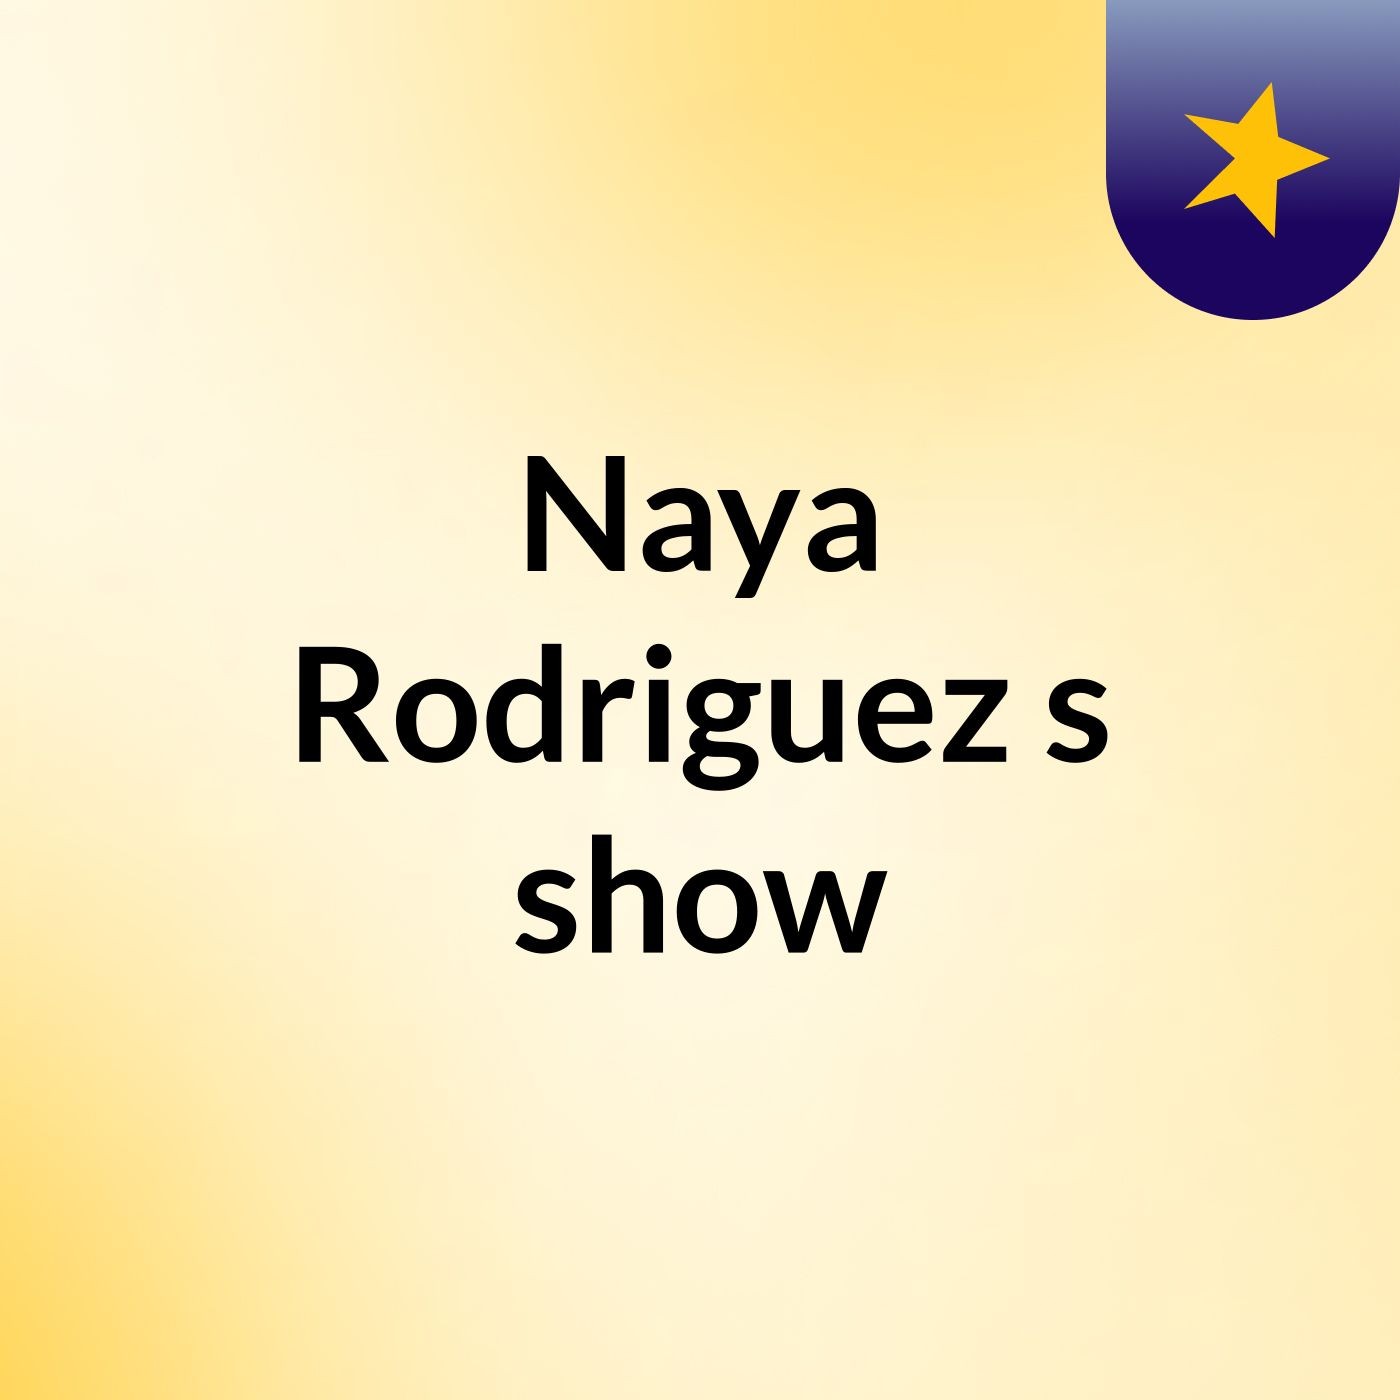 Naya Rodriguez's show